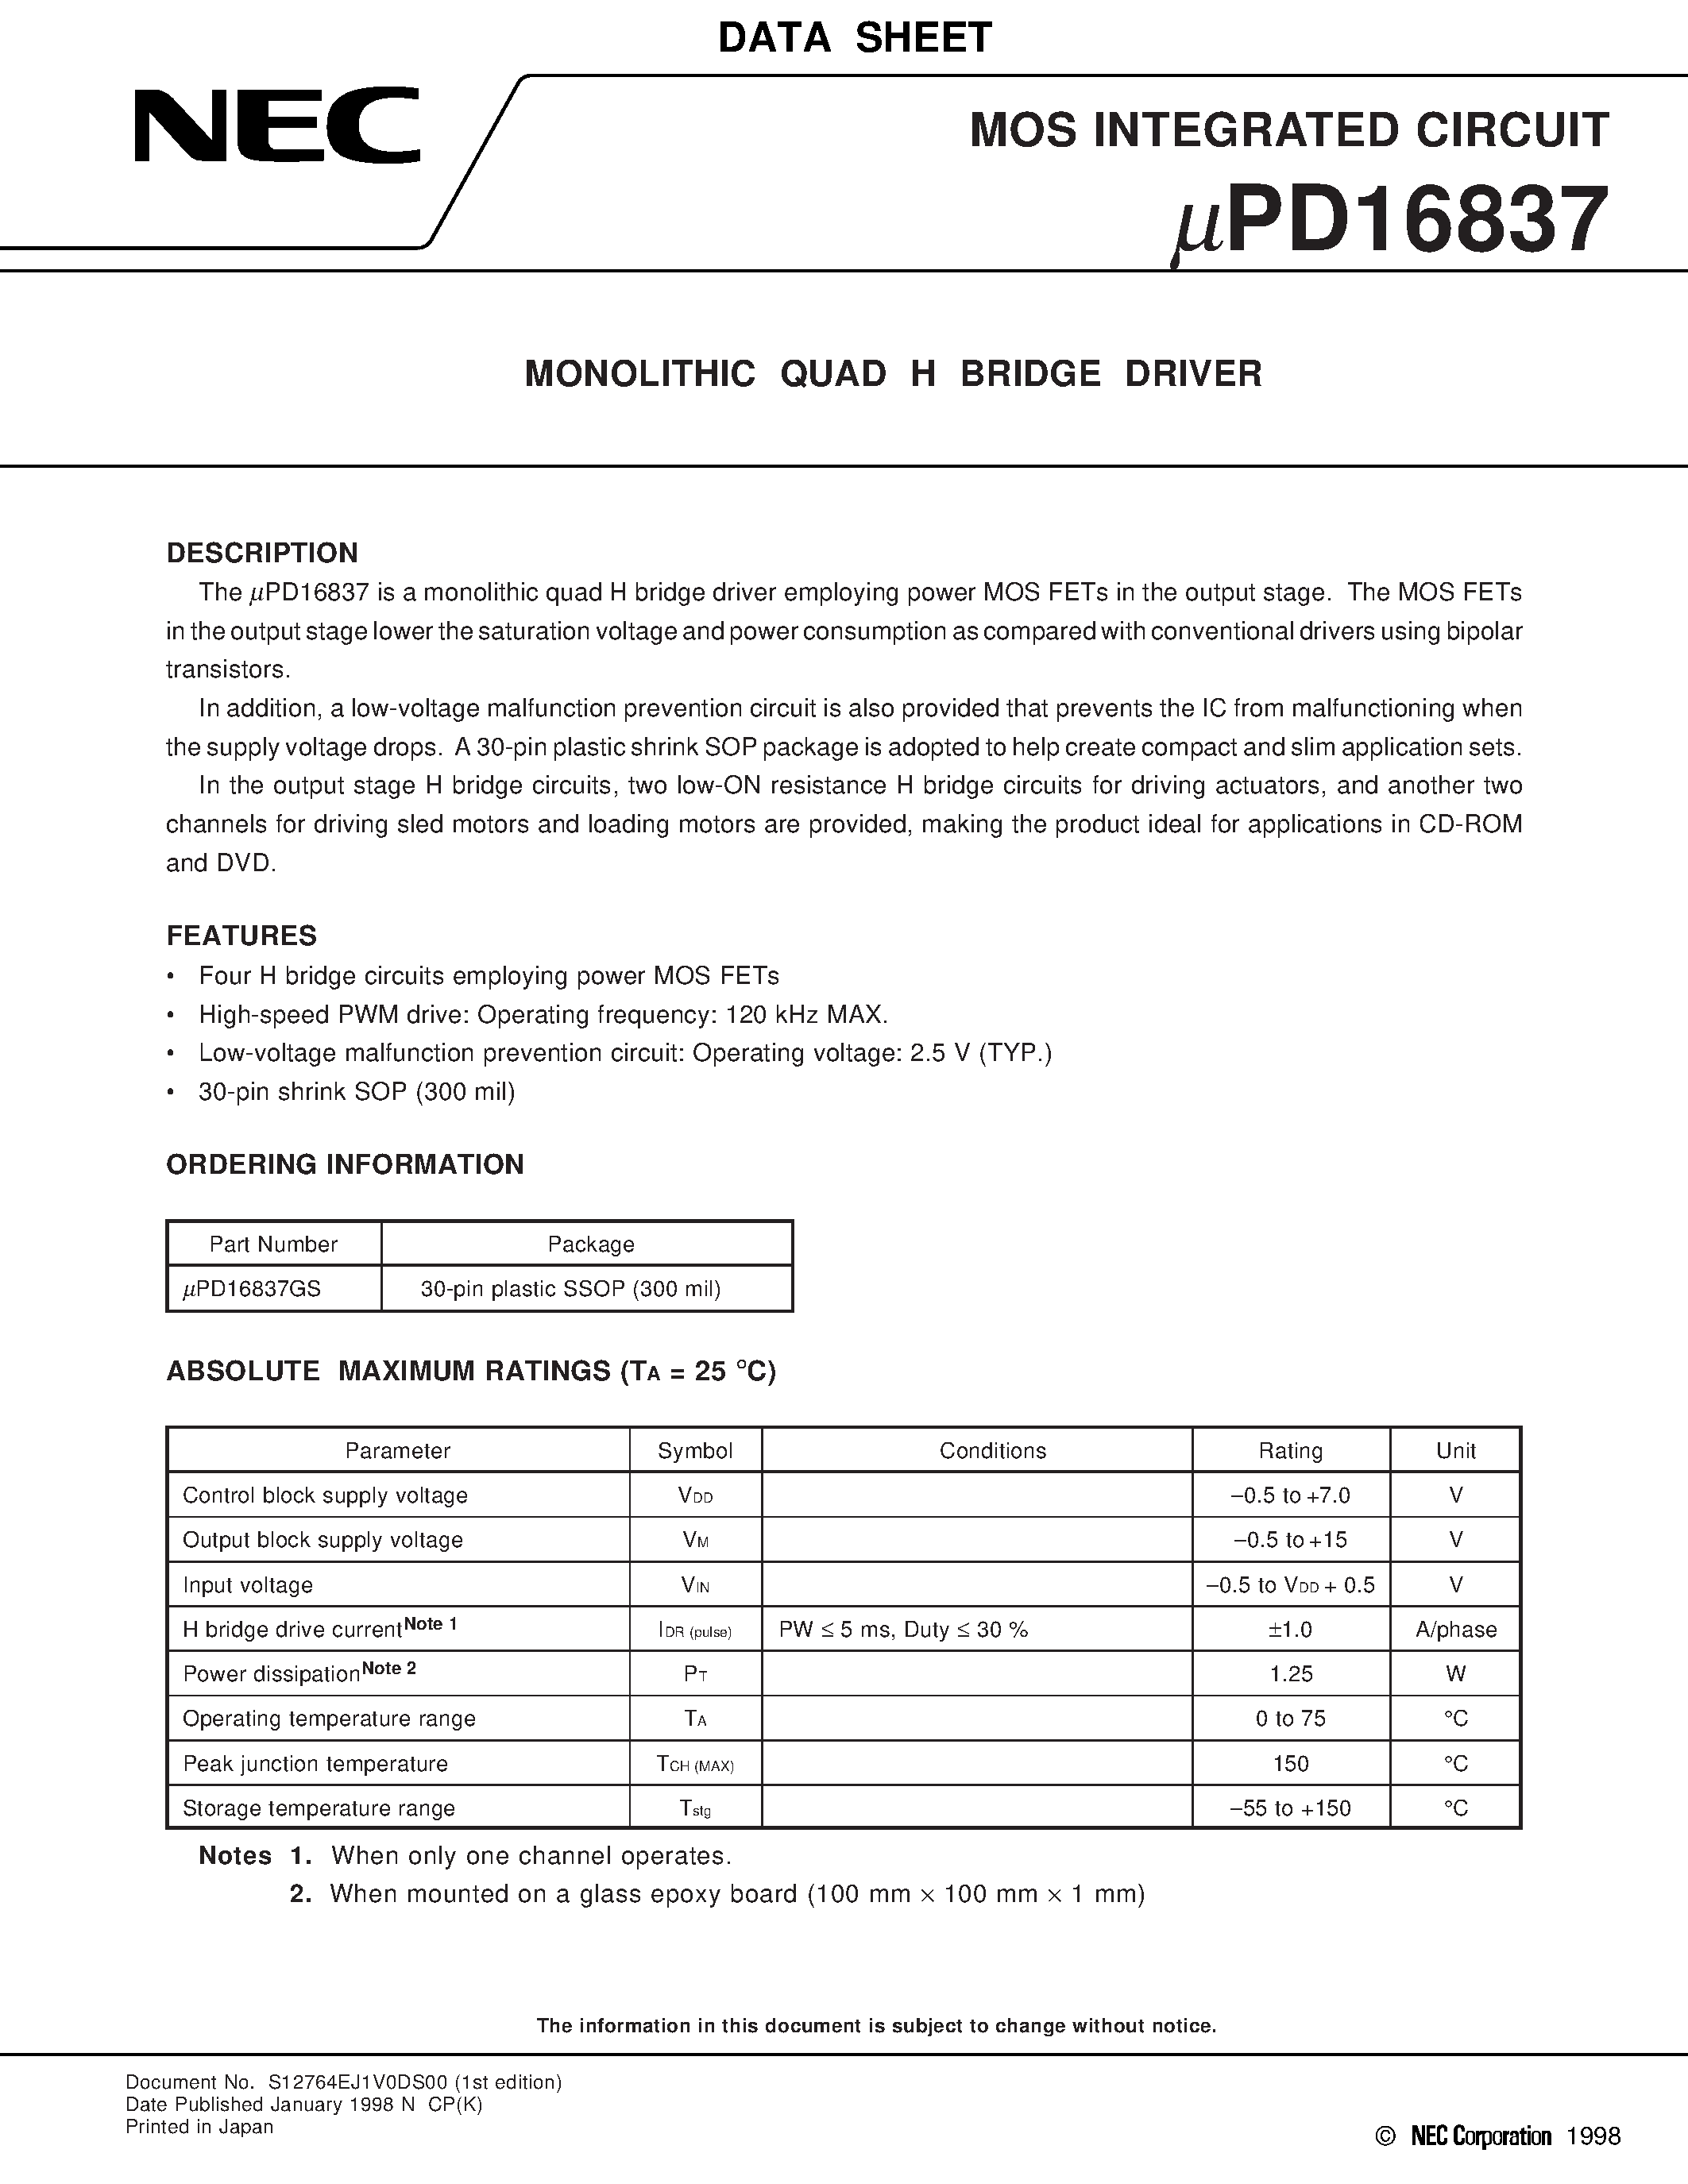 Datasheet UPD16837 - MONOLITHIC QUAD H BRIDGE DRIVER page 1